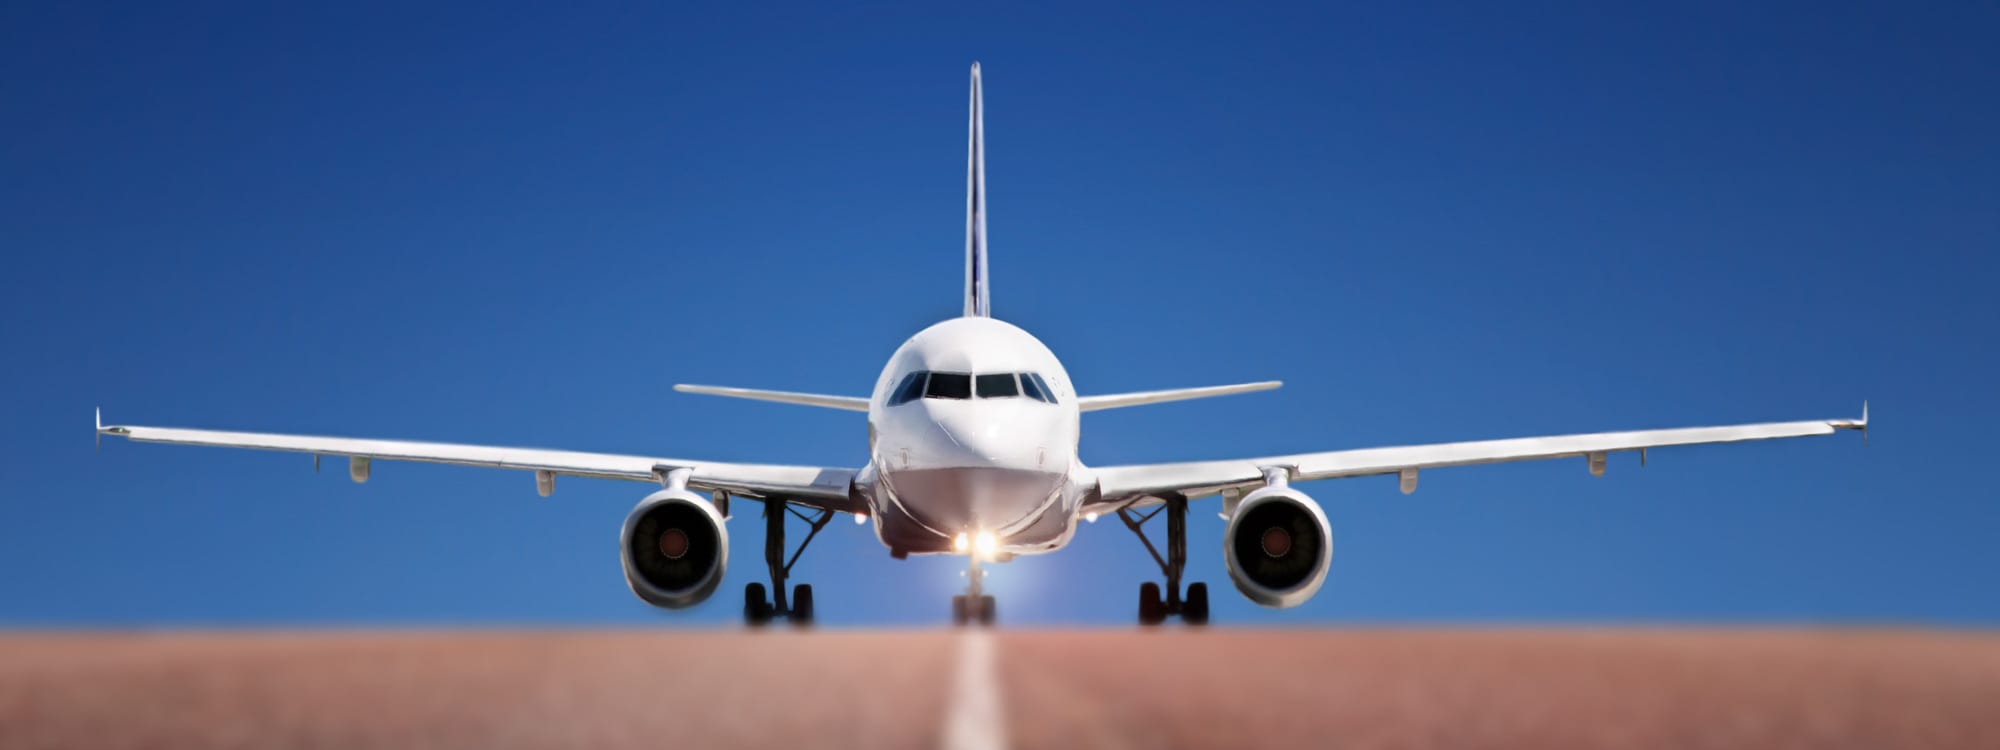 Law training in aviation addresses 